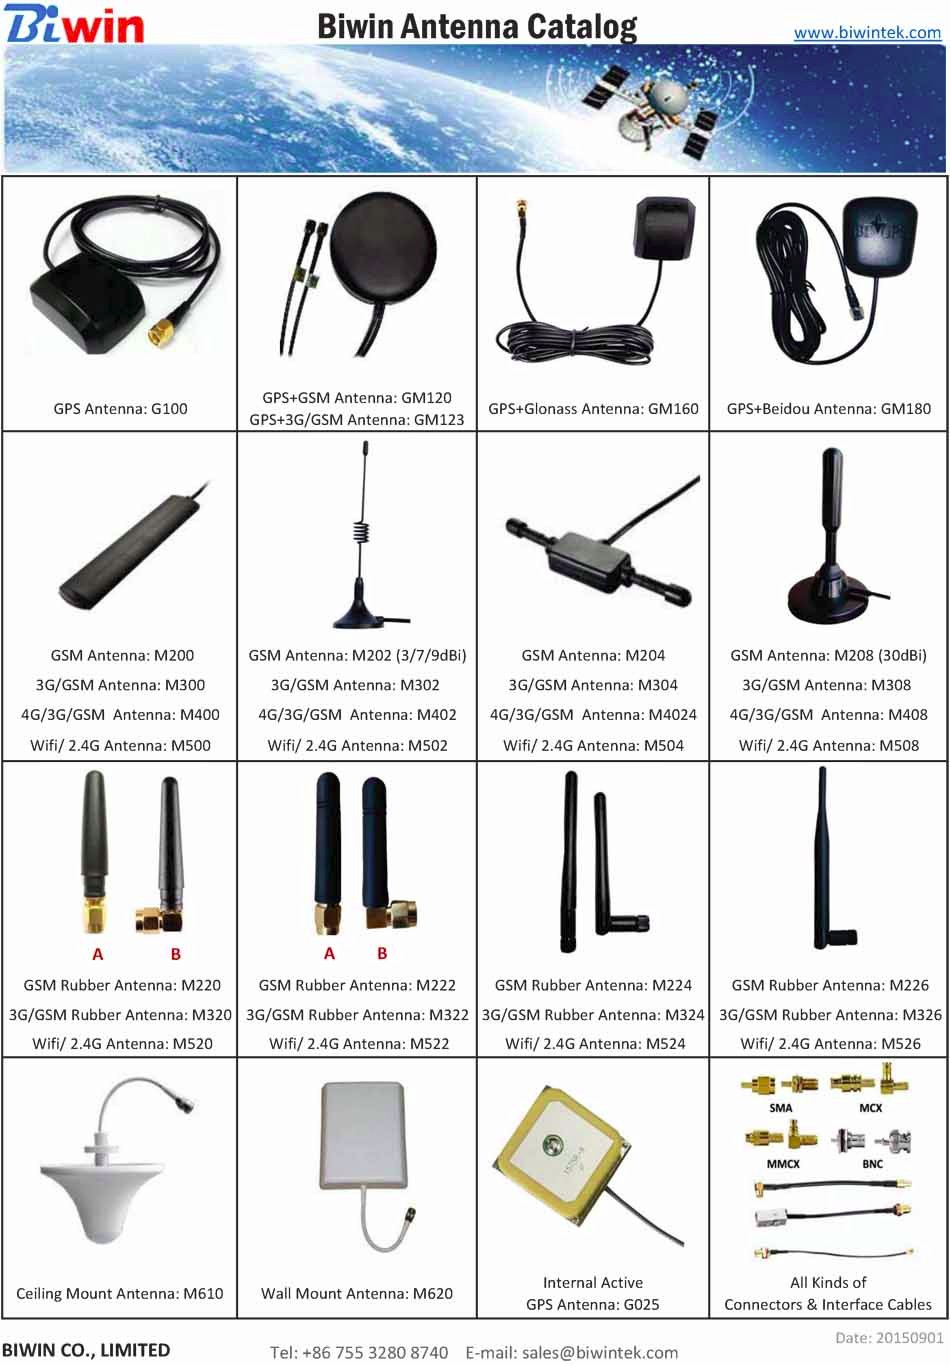 Biwin Antenna Catalog_2015